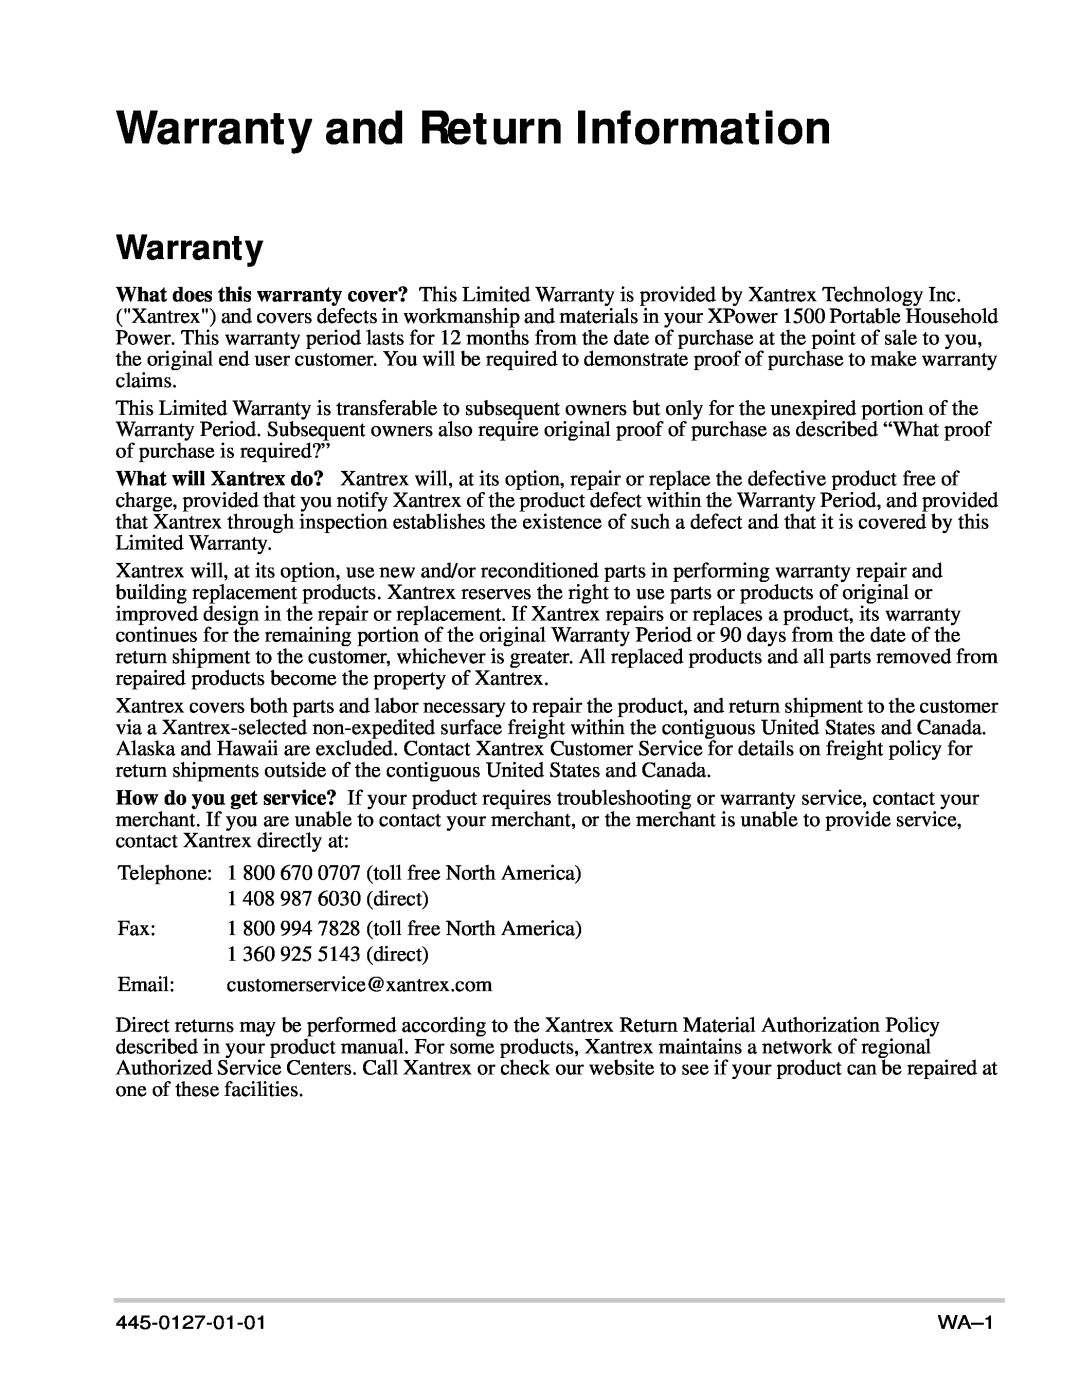 Xantrex Technology 1500 manual Warranty and Return Information 